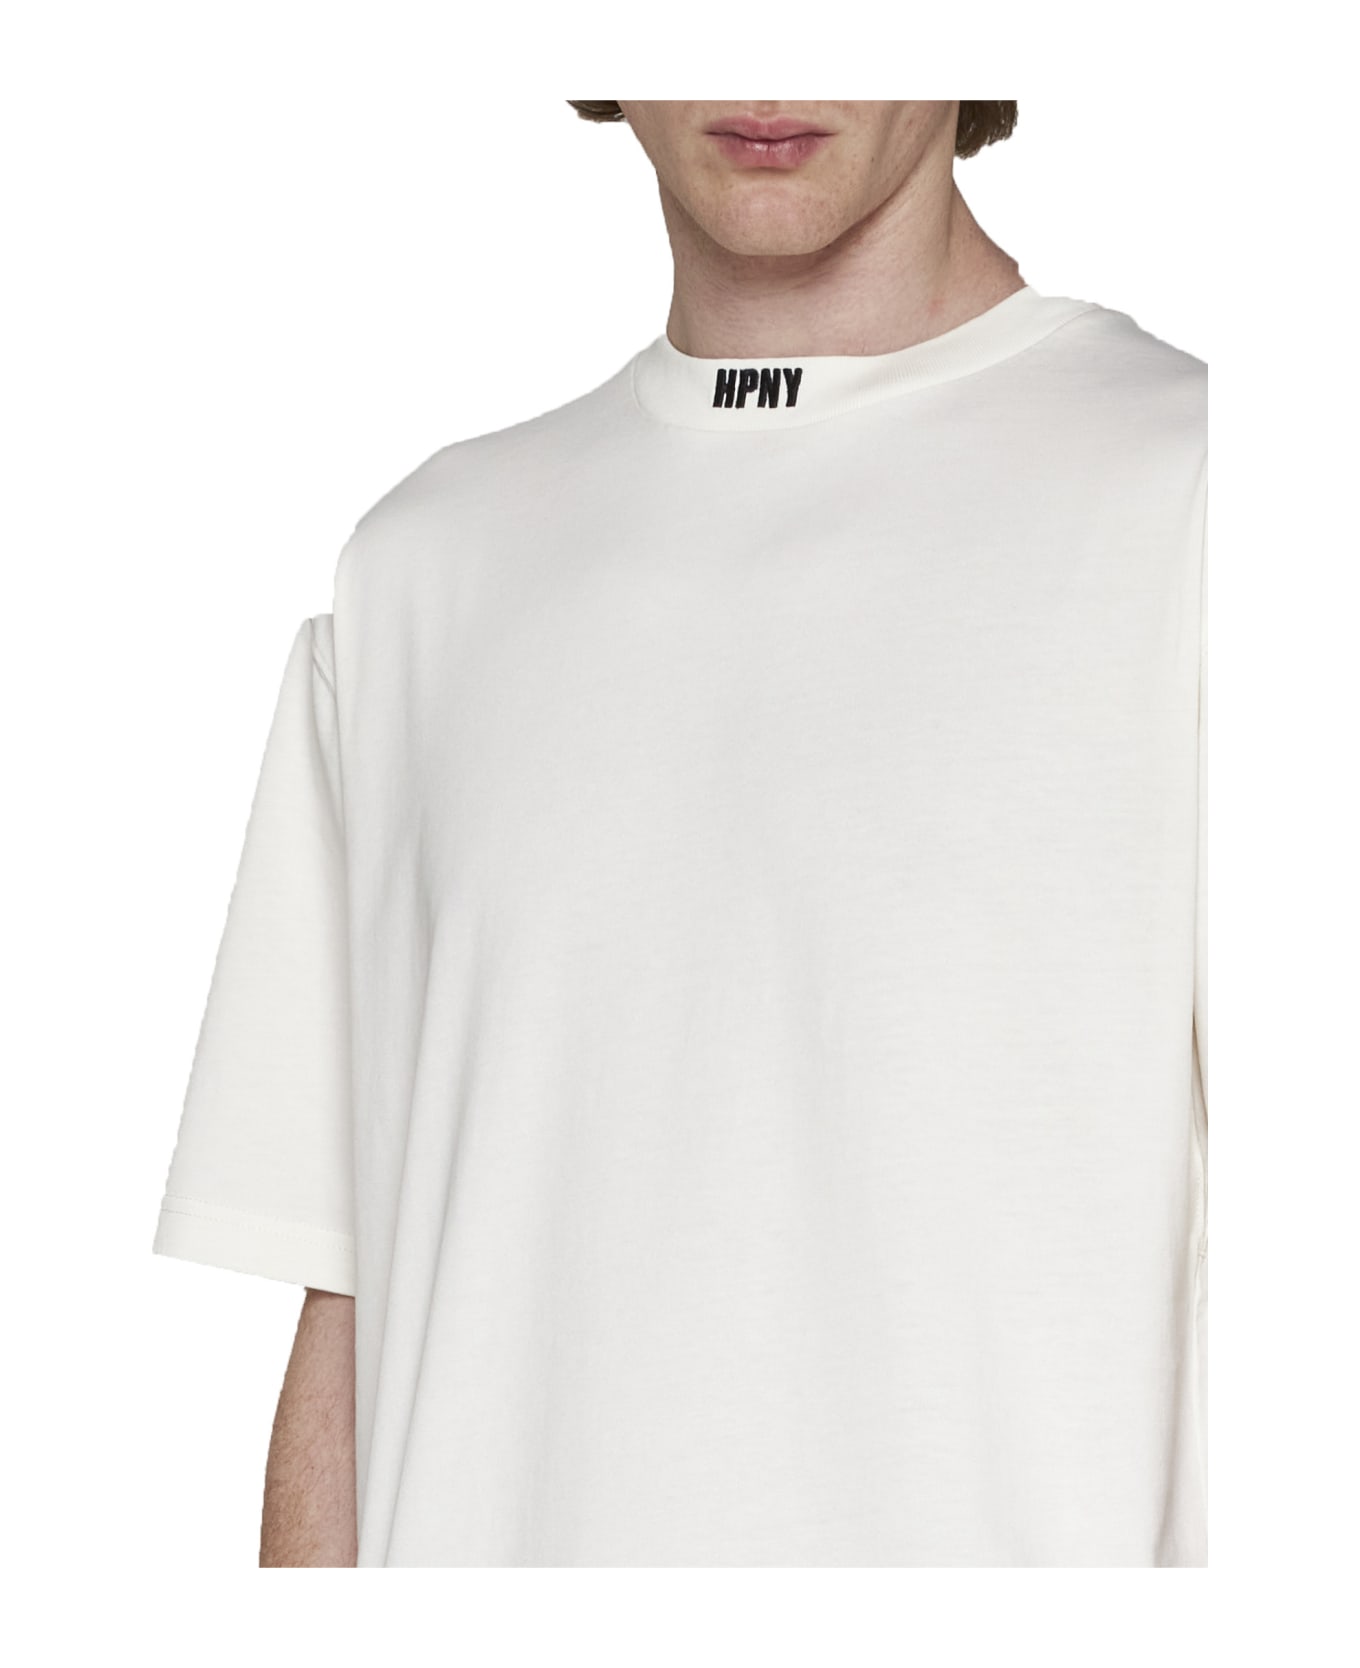 HERON PRESTON Hpny Embroidered T-shirt - White/black